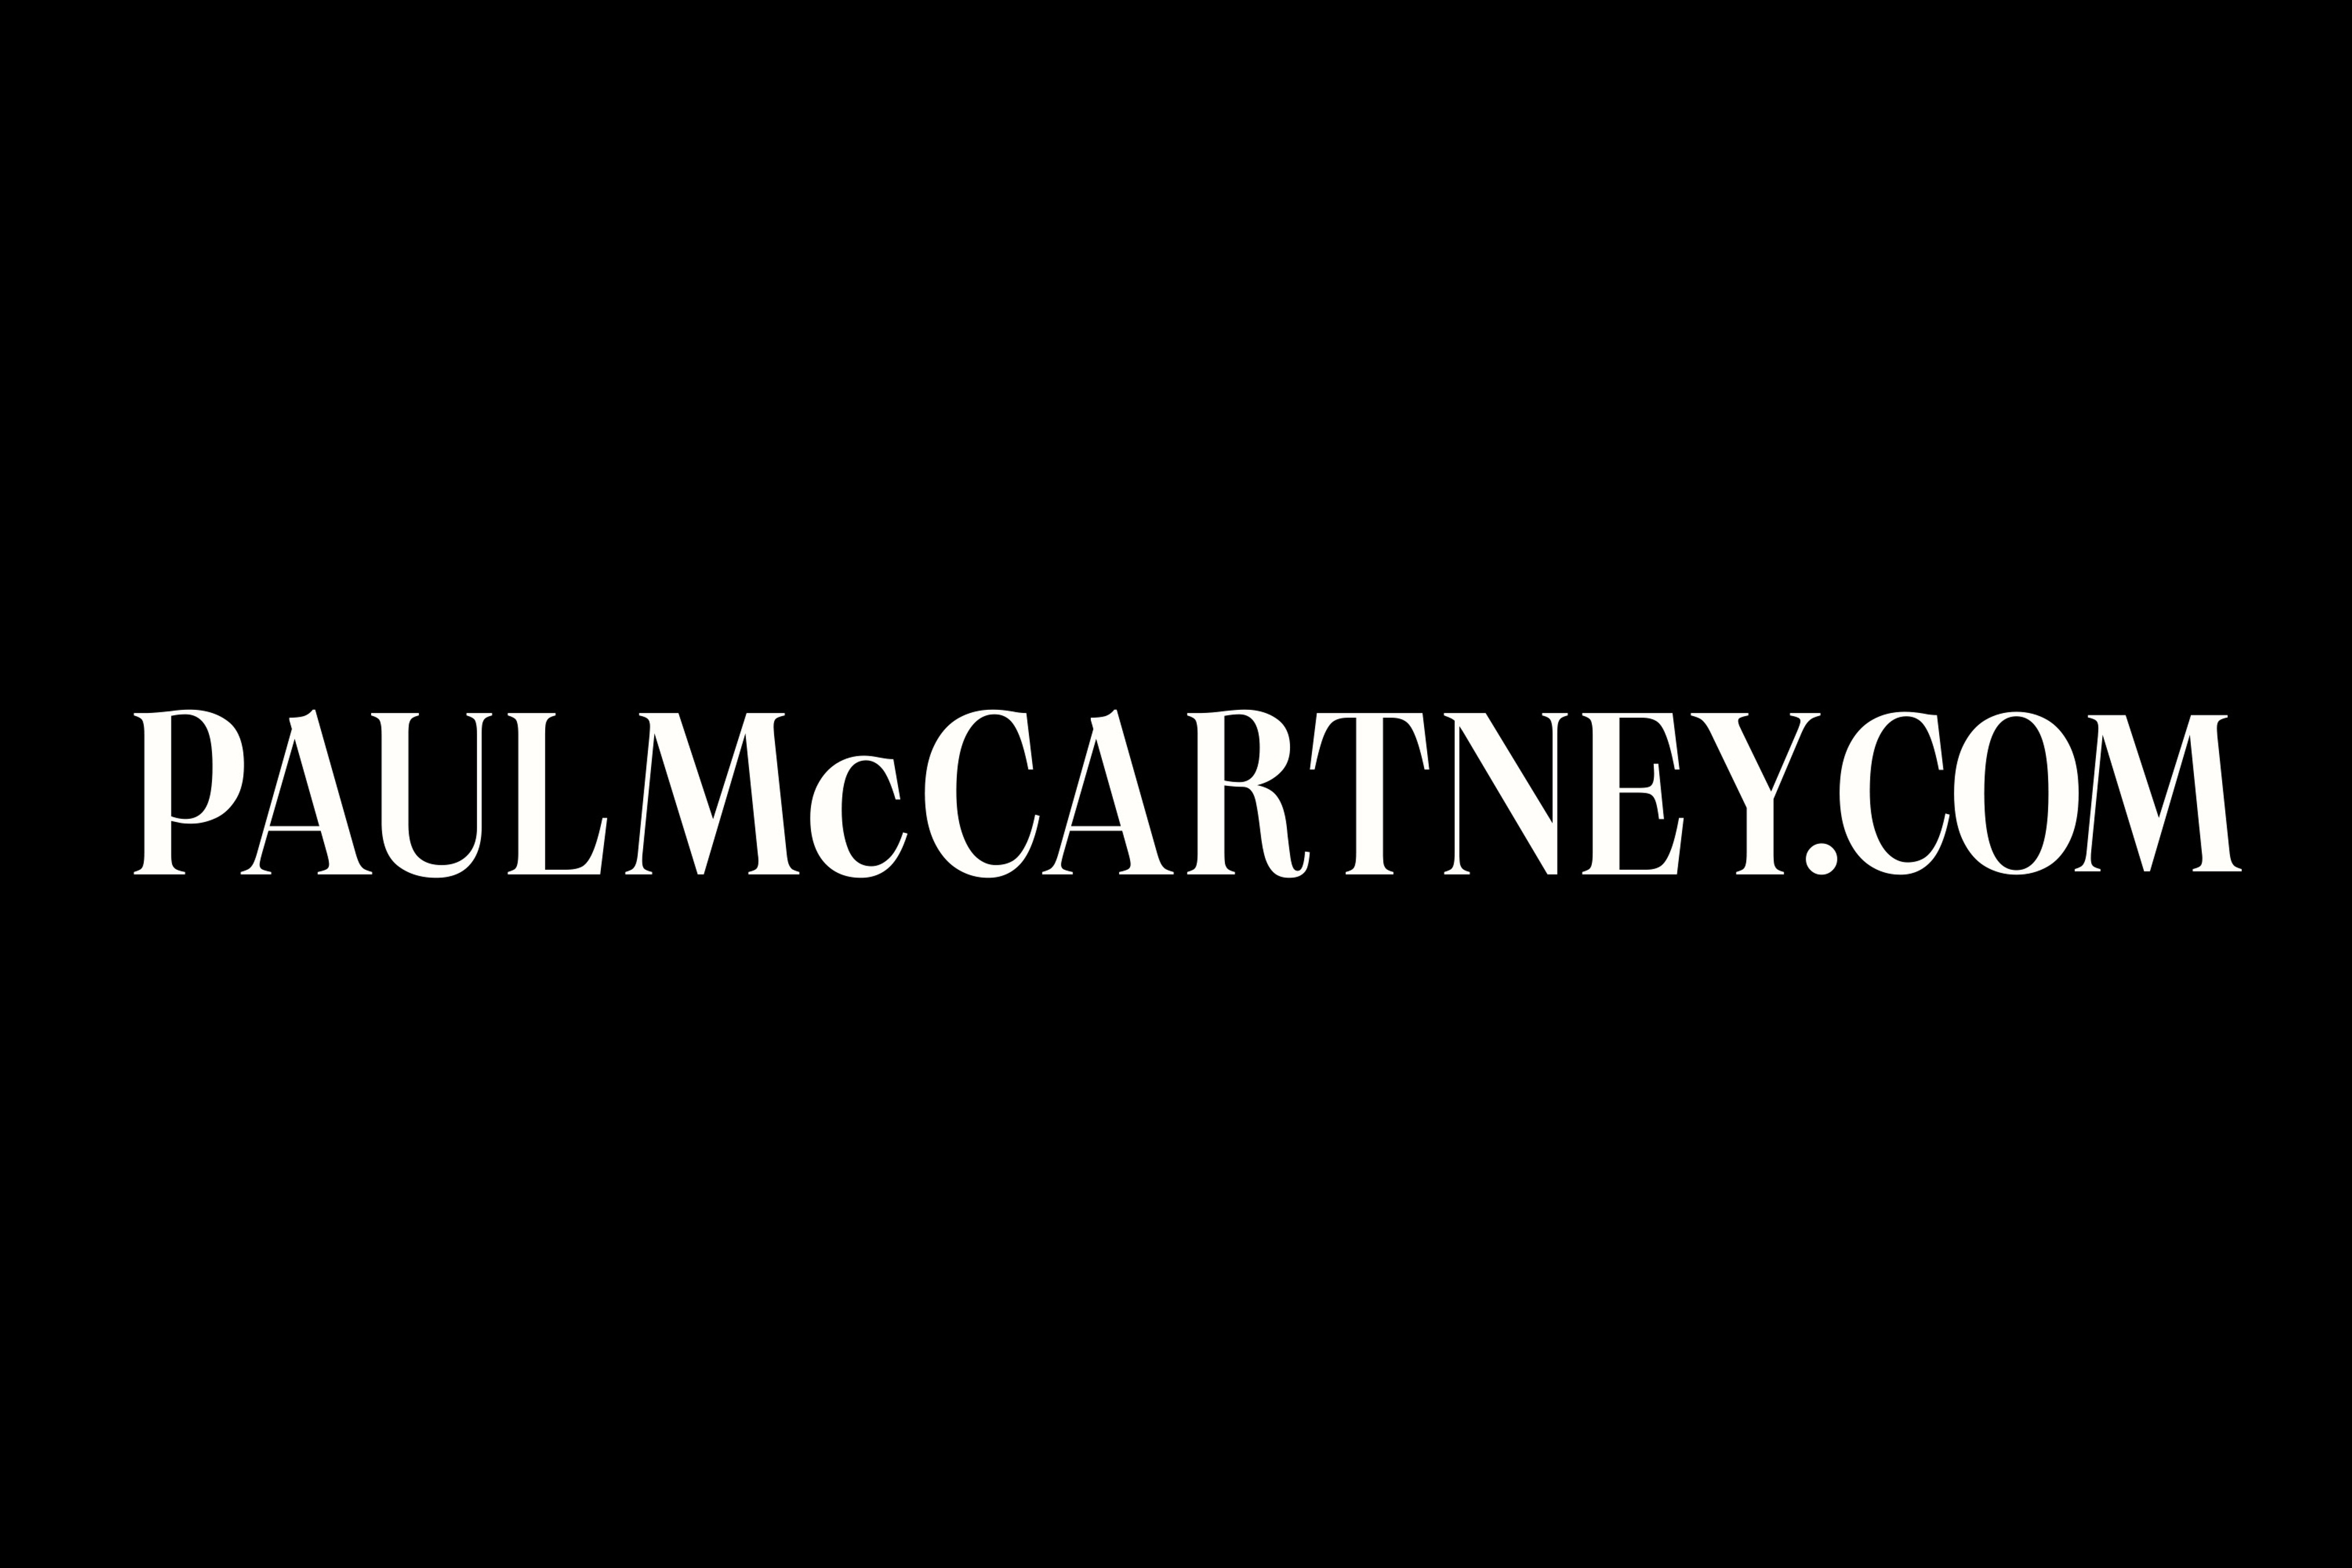 PaulMcCartney.com white logo on black background